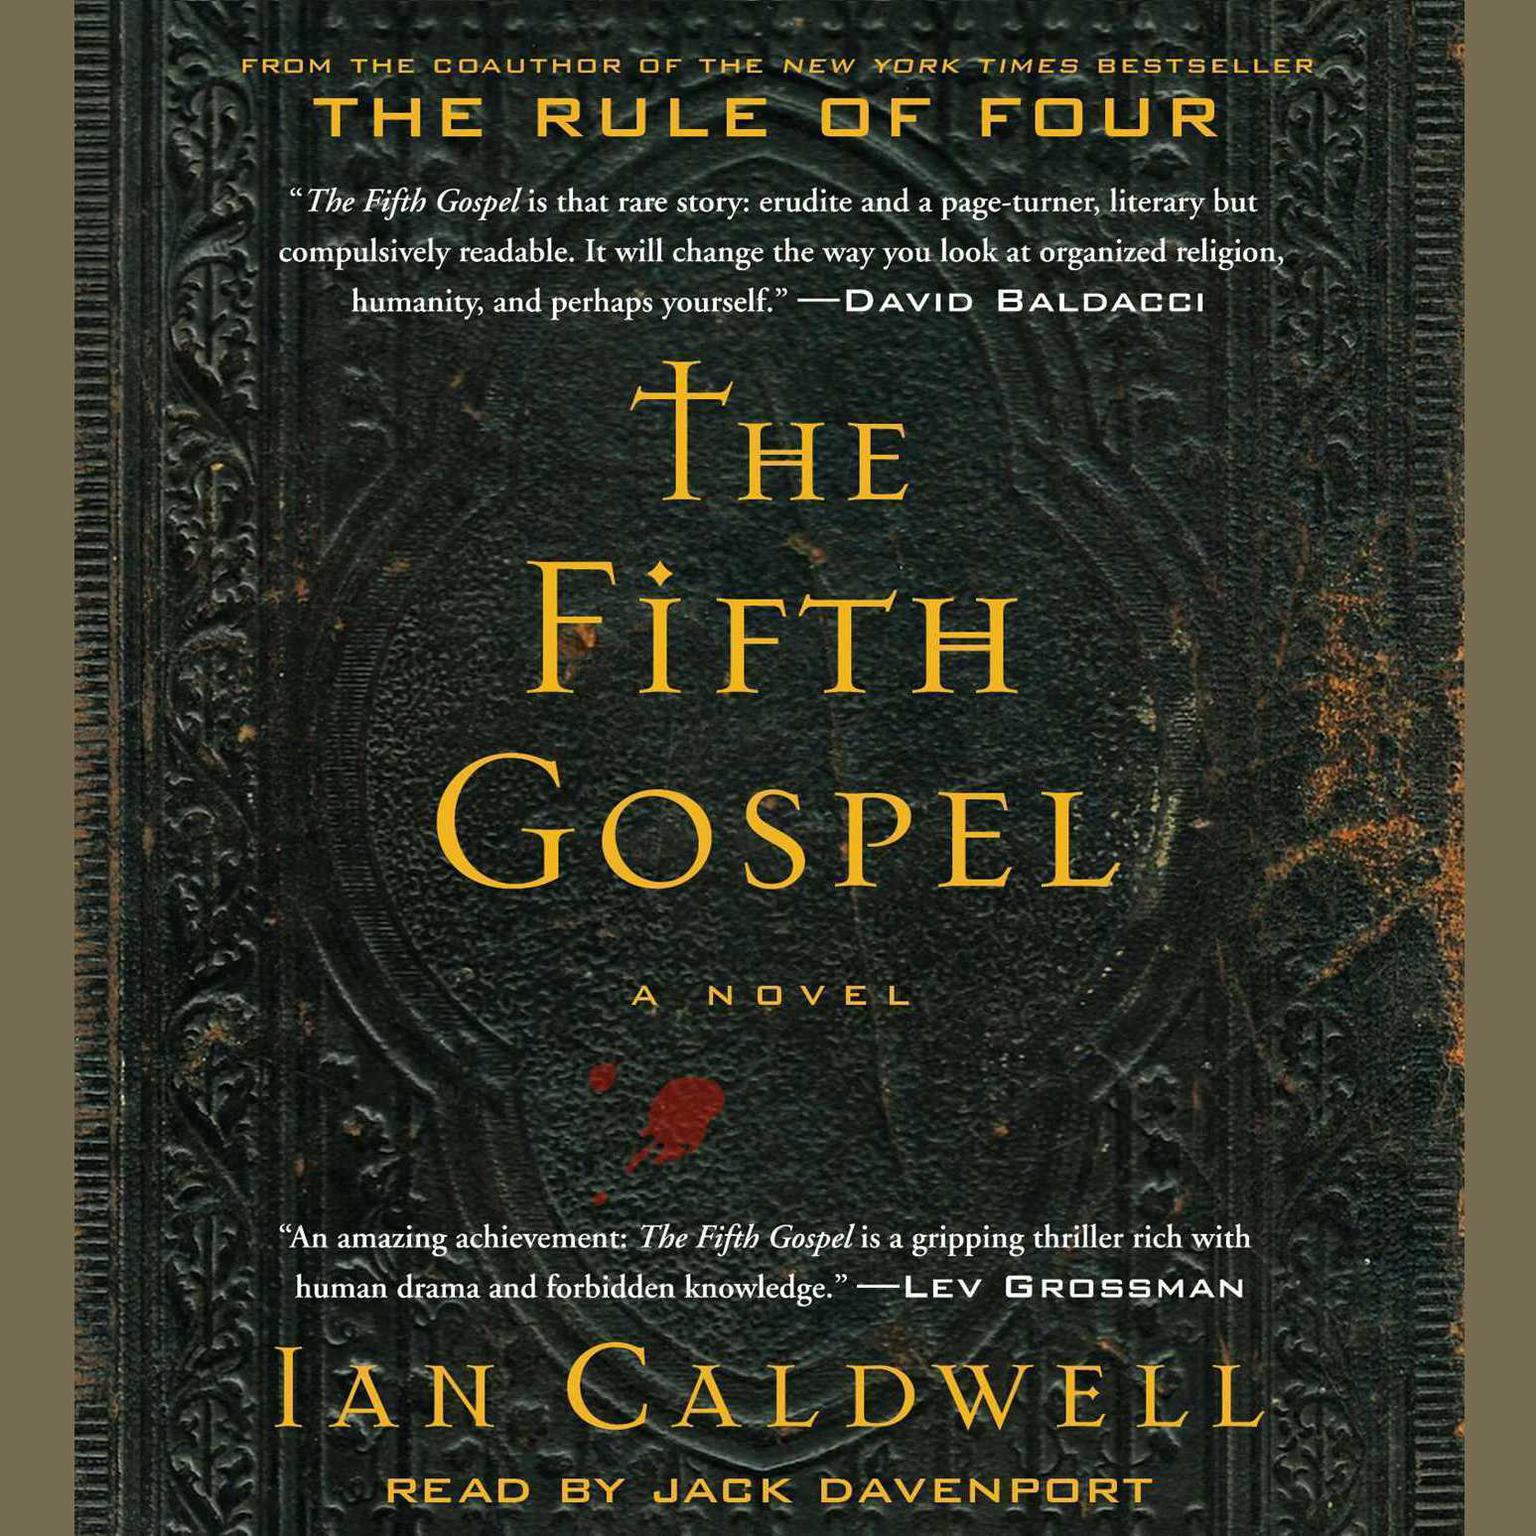 The Fifth Gospel: A Novel Audiobook, by Ian Caldwell